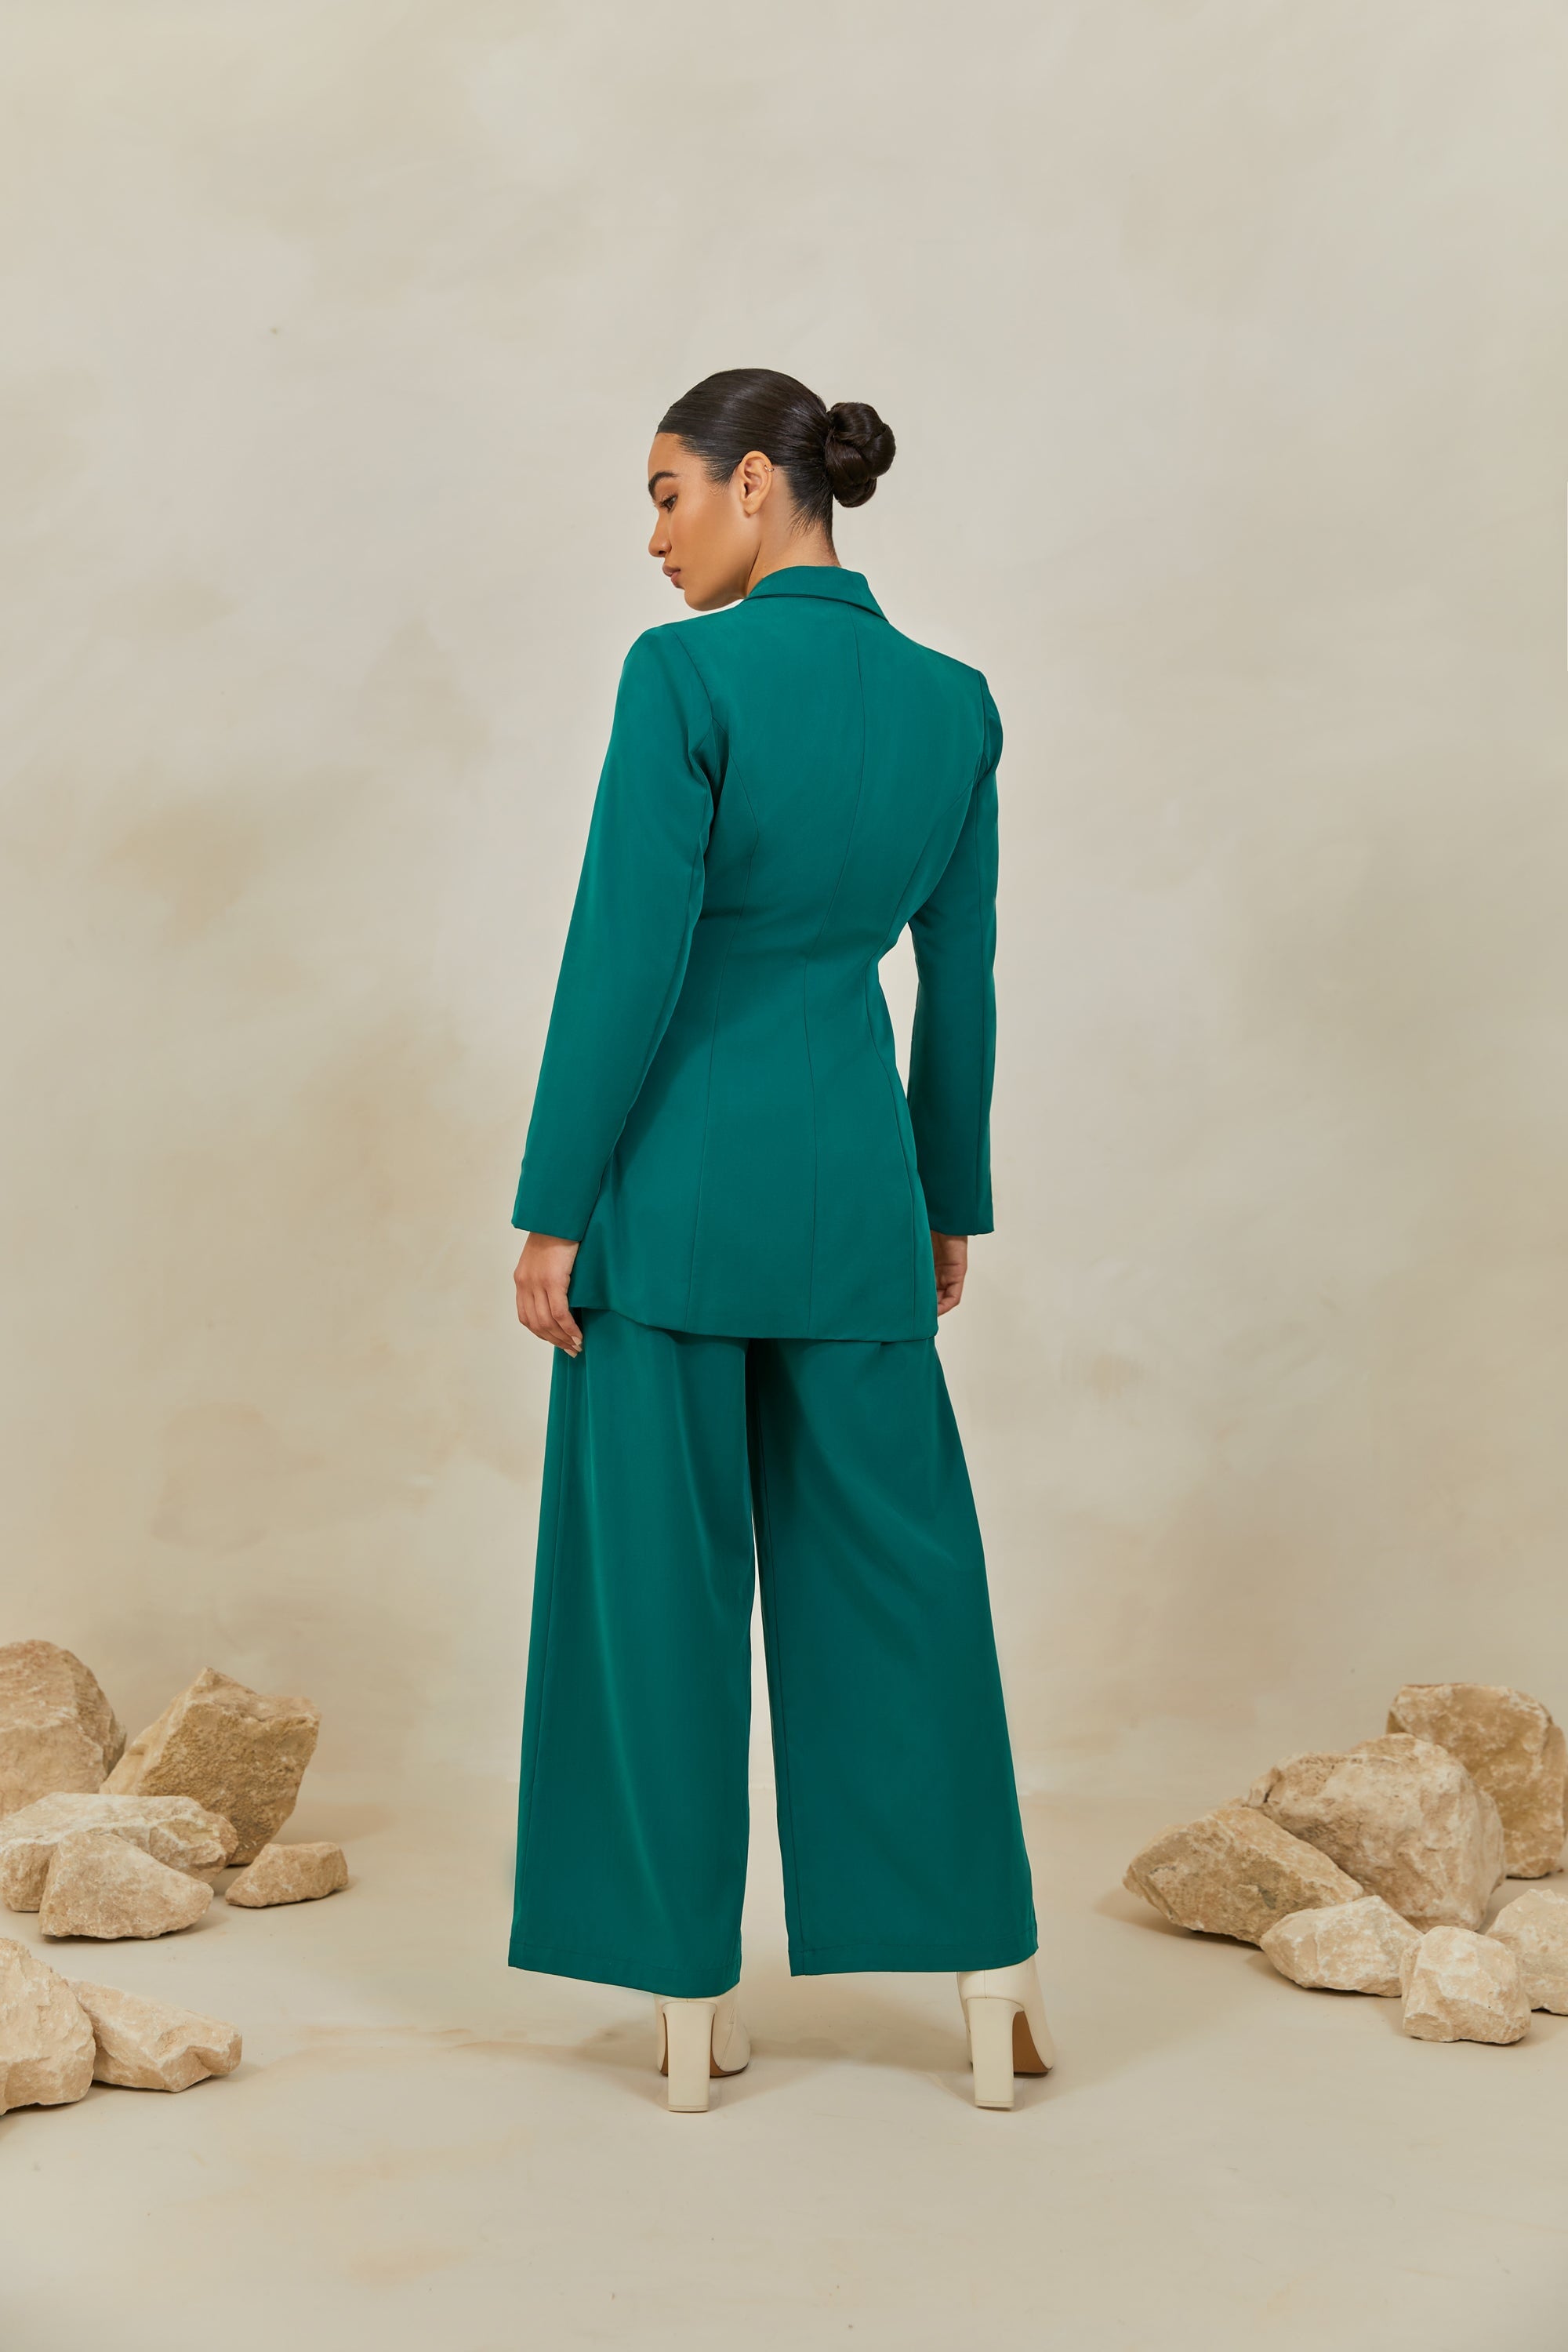 Alexia Tie Front Blazer - Jade Veiled Collection 